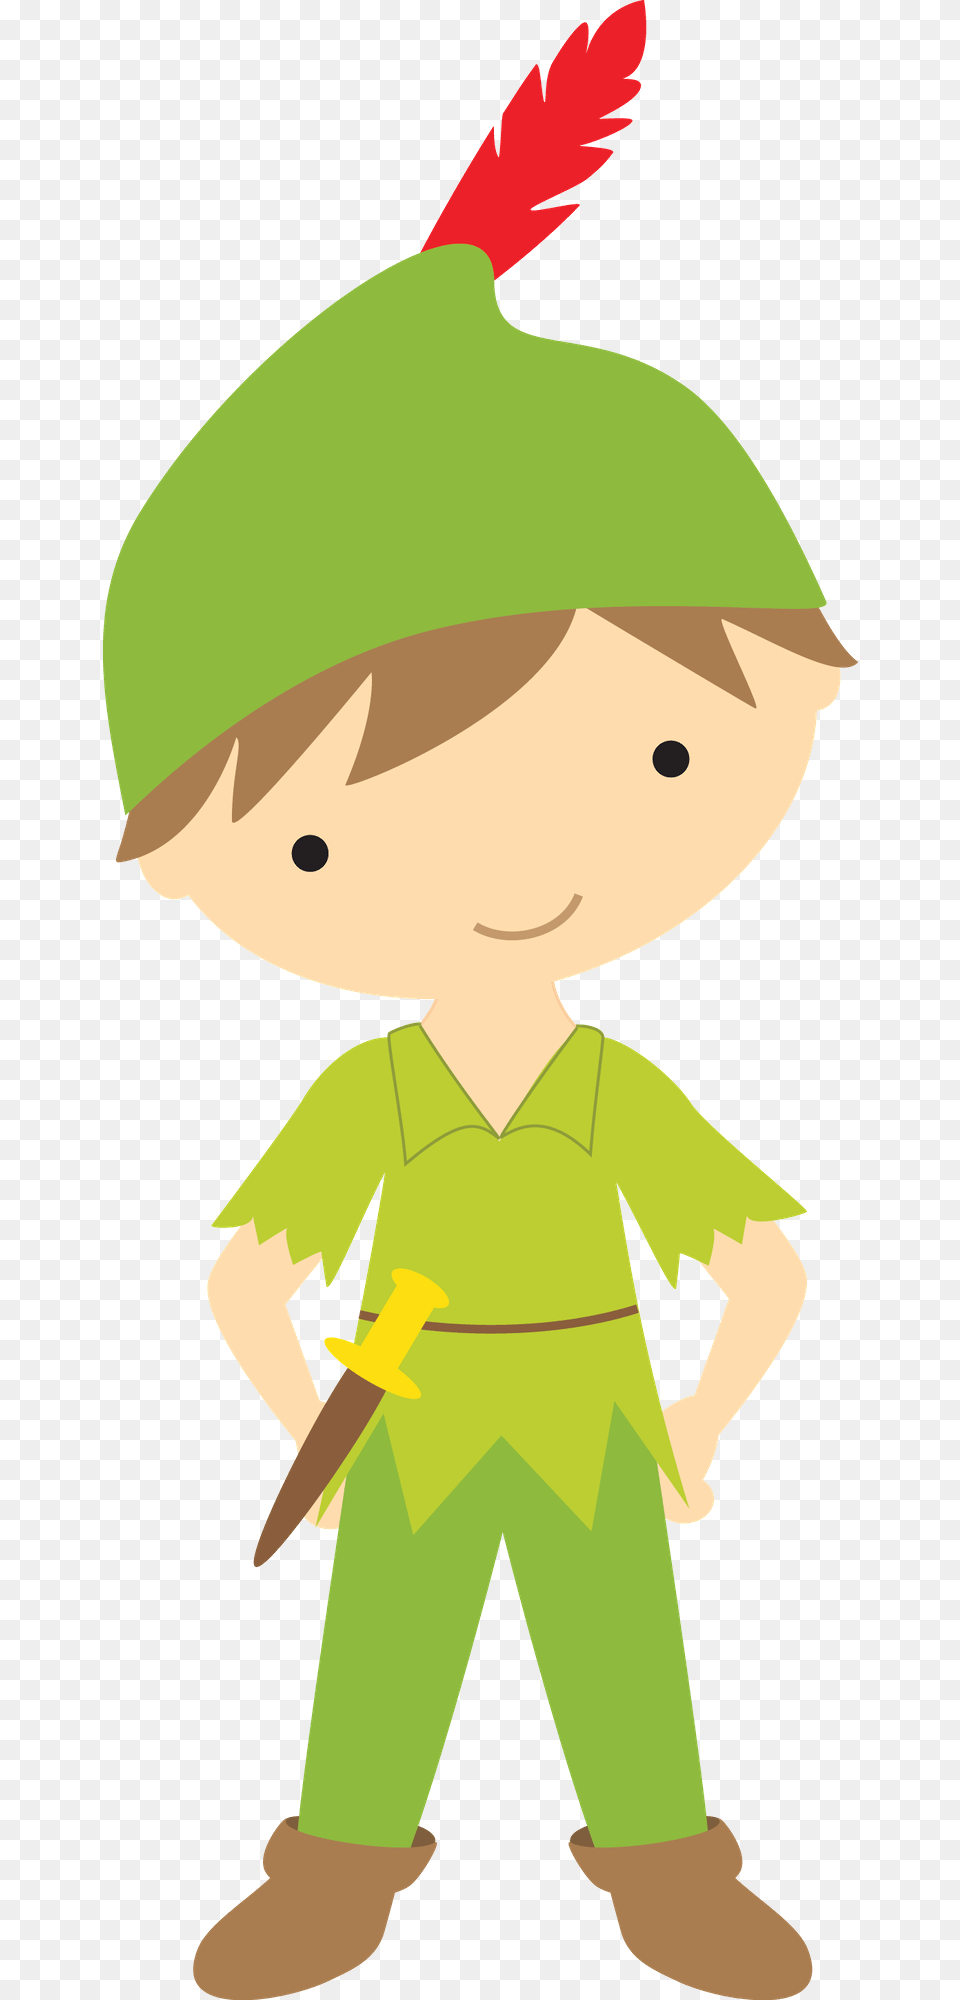 Minus Peter Pan Disney Peter Pans Disney Inspired Peter Boy Cartoon, Elf, Baby, Person, Face Png Image